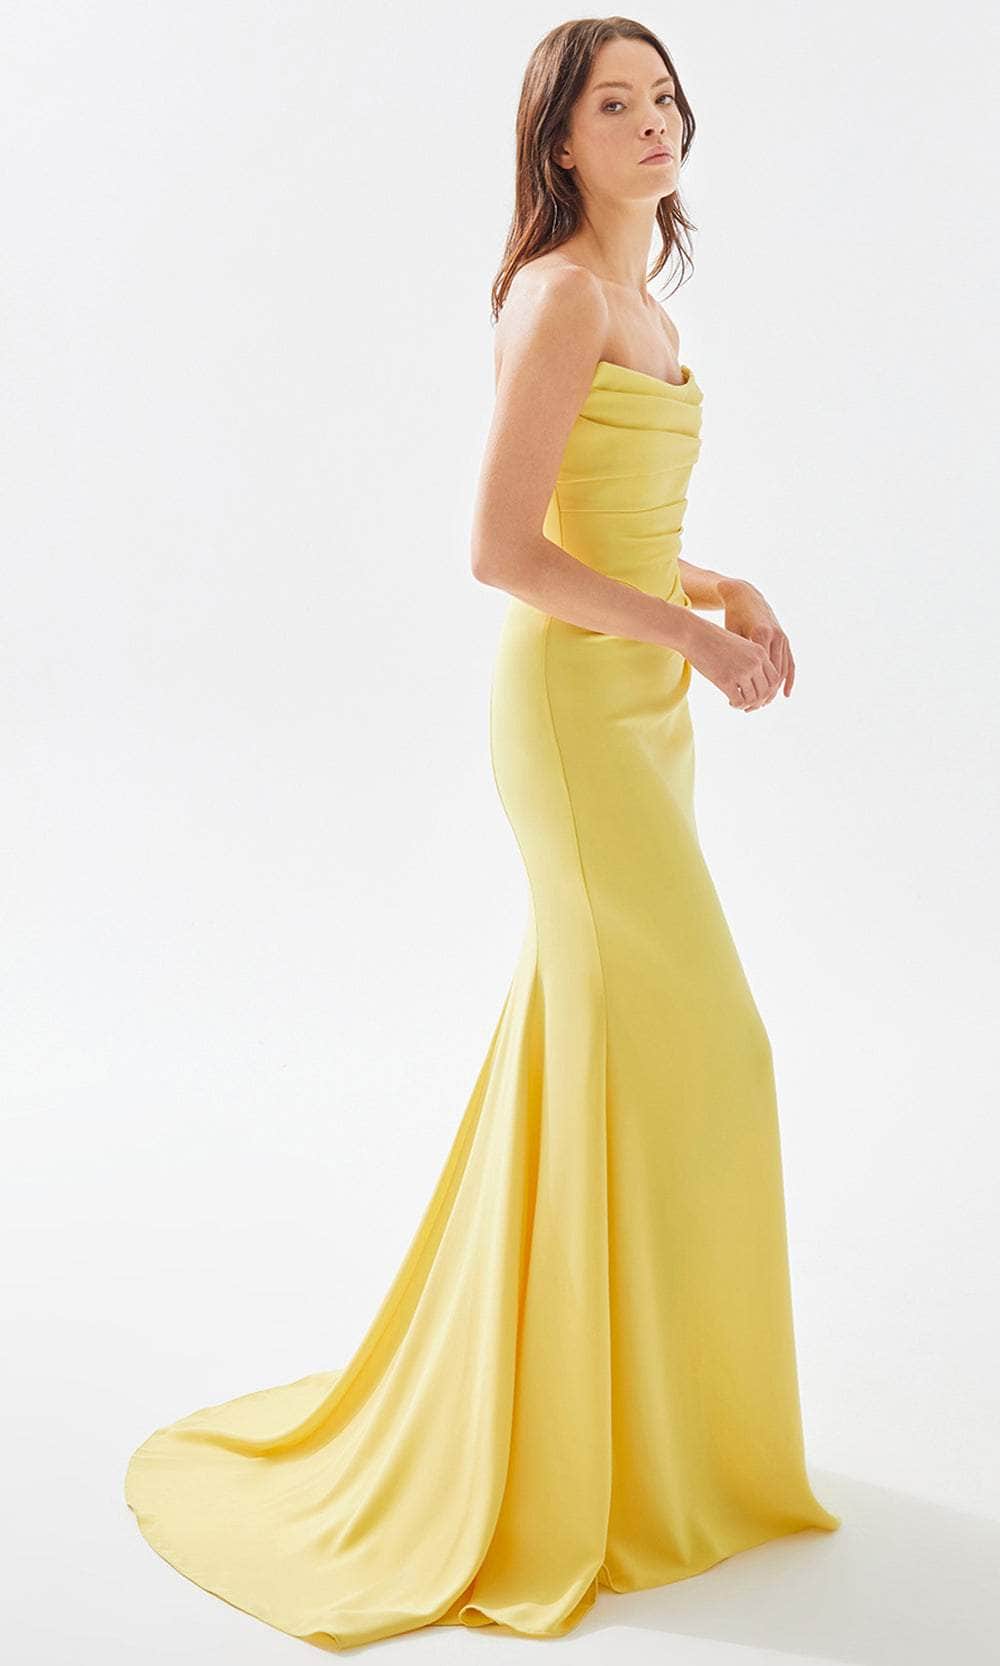 Tarik Ediz 52017 - Strapless Sheath Prom Dress Special Occasion Dress